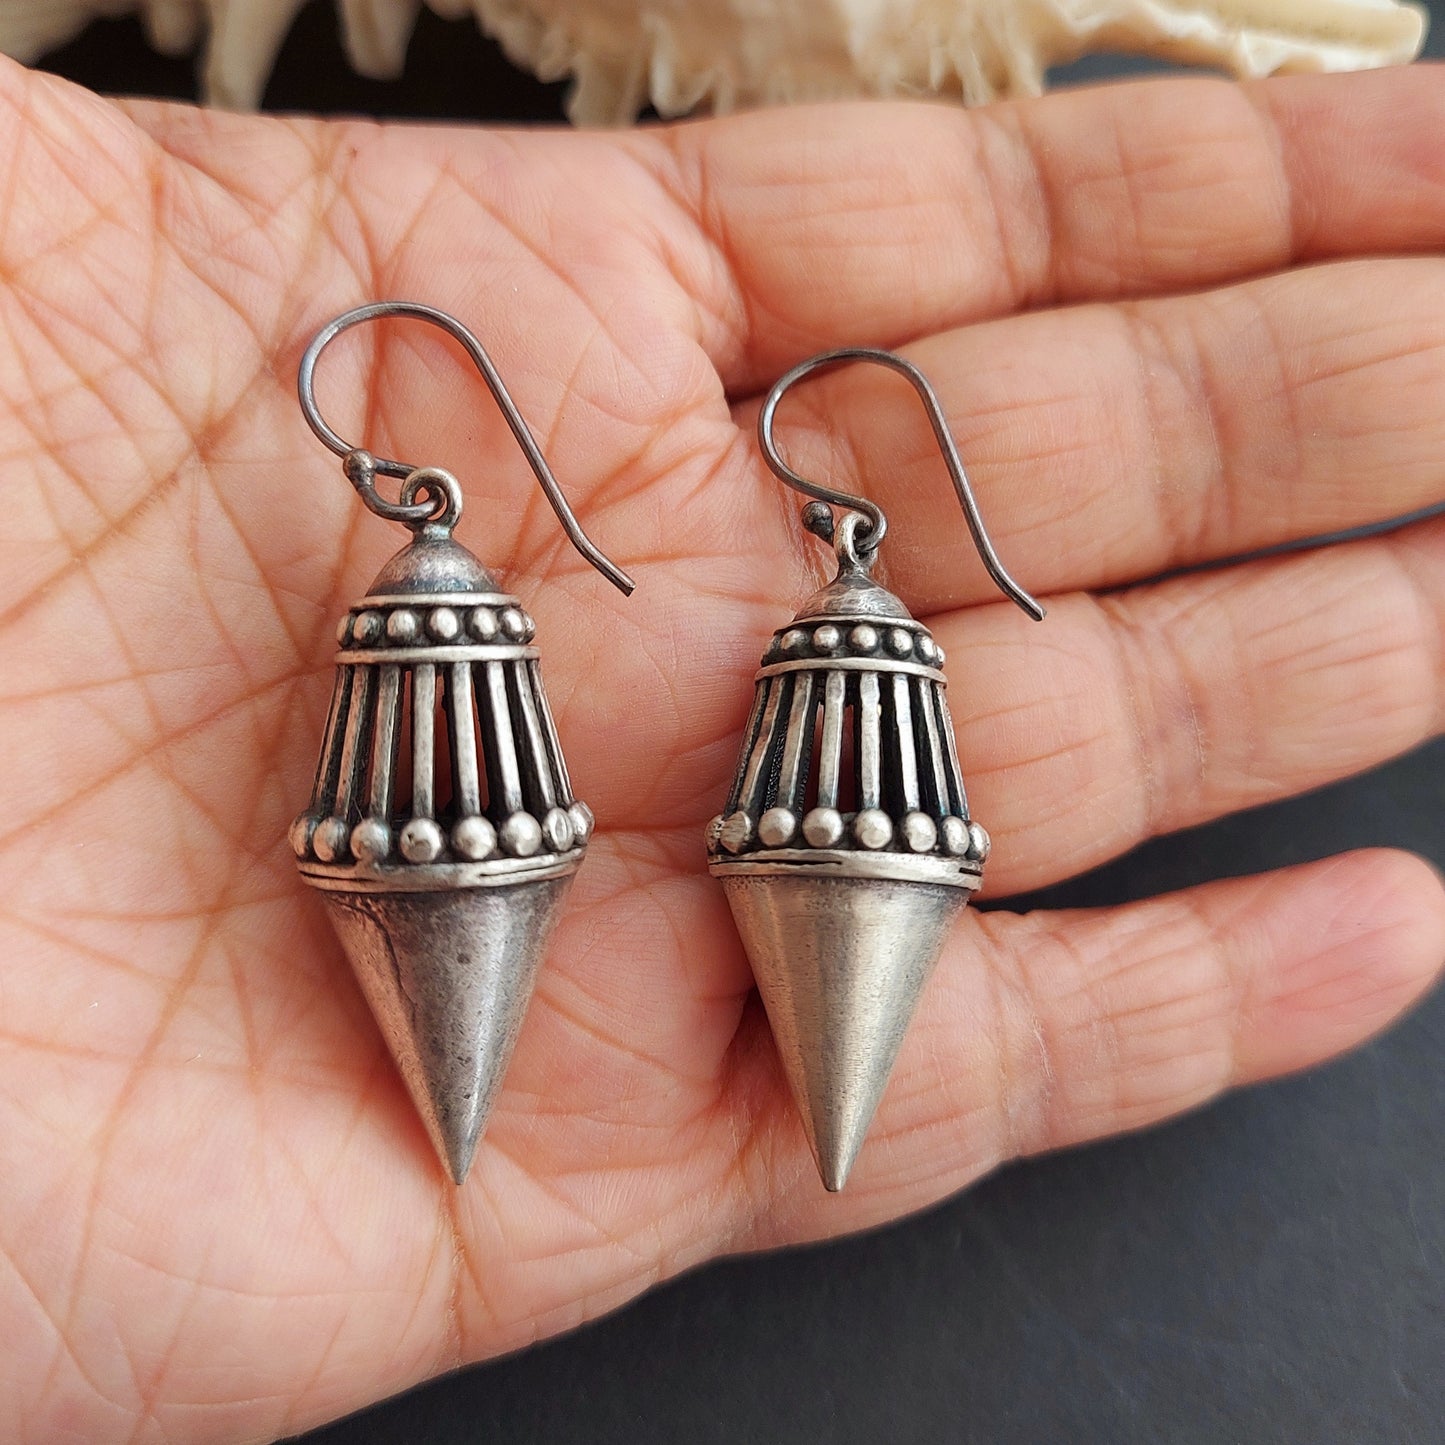 Silver Look alike Conical Pendant Earrings Set